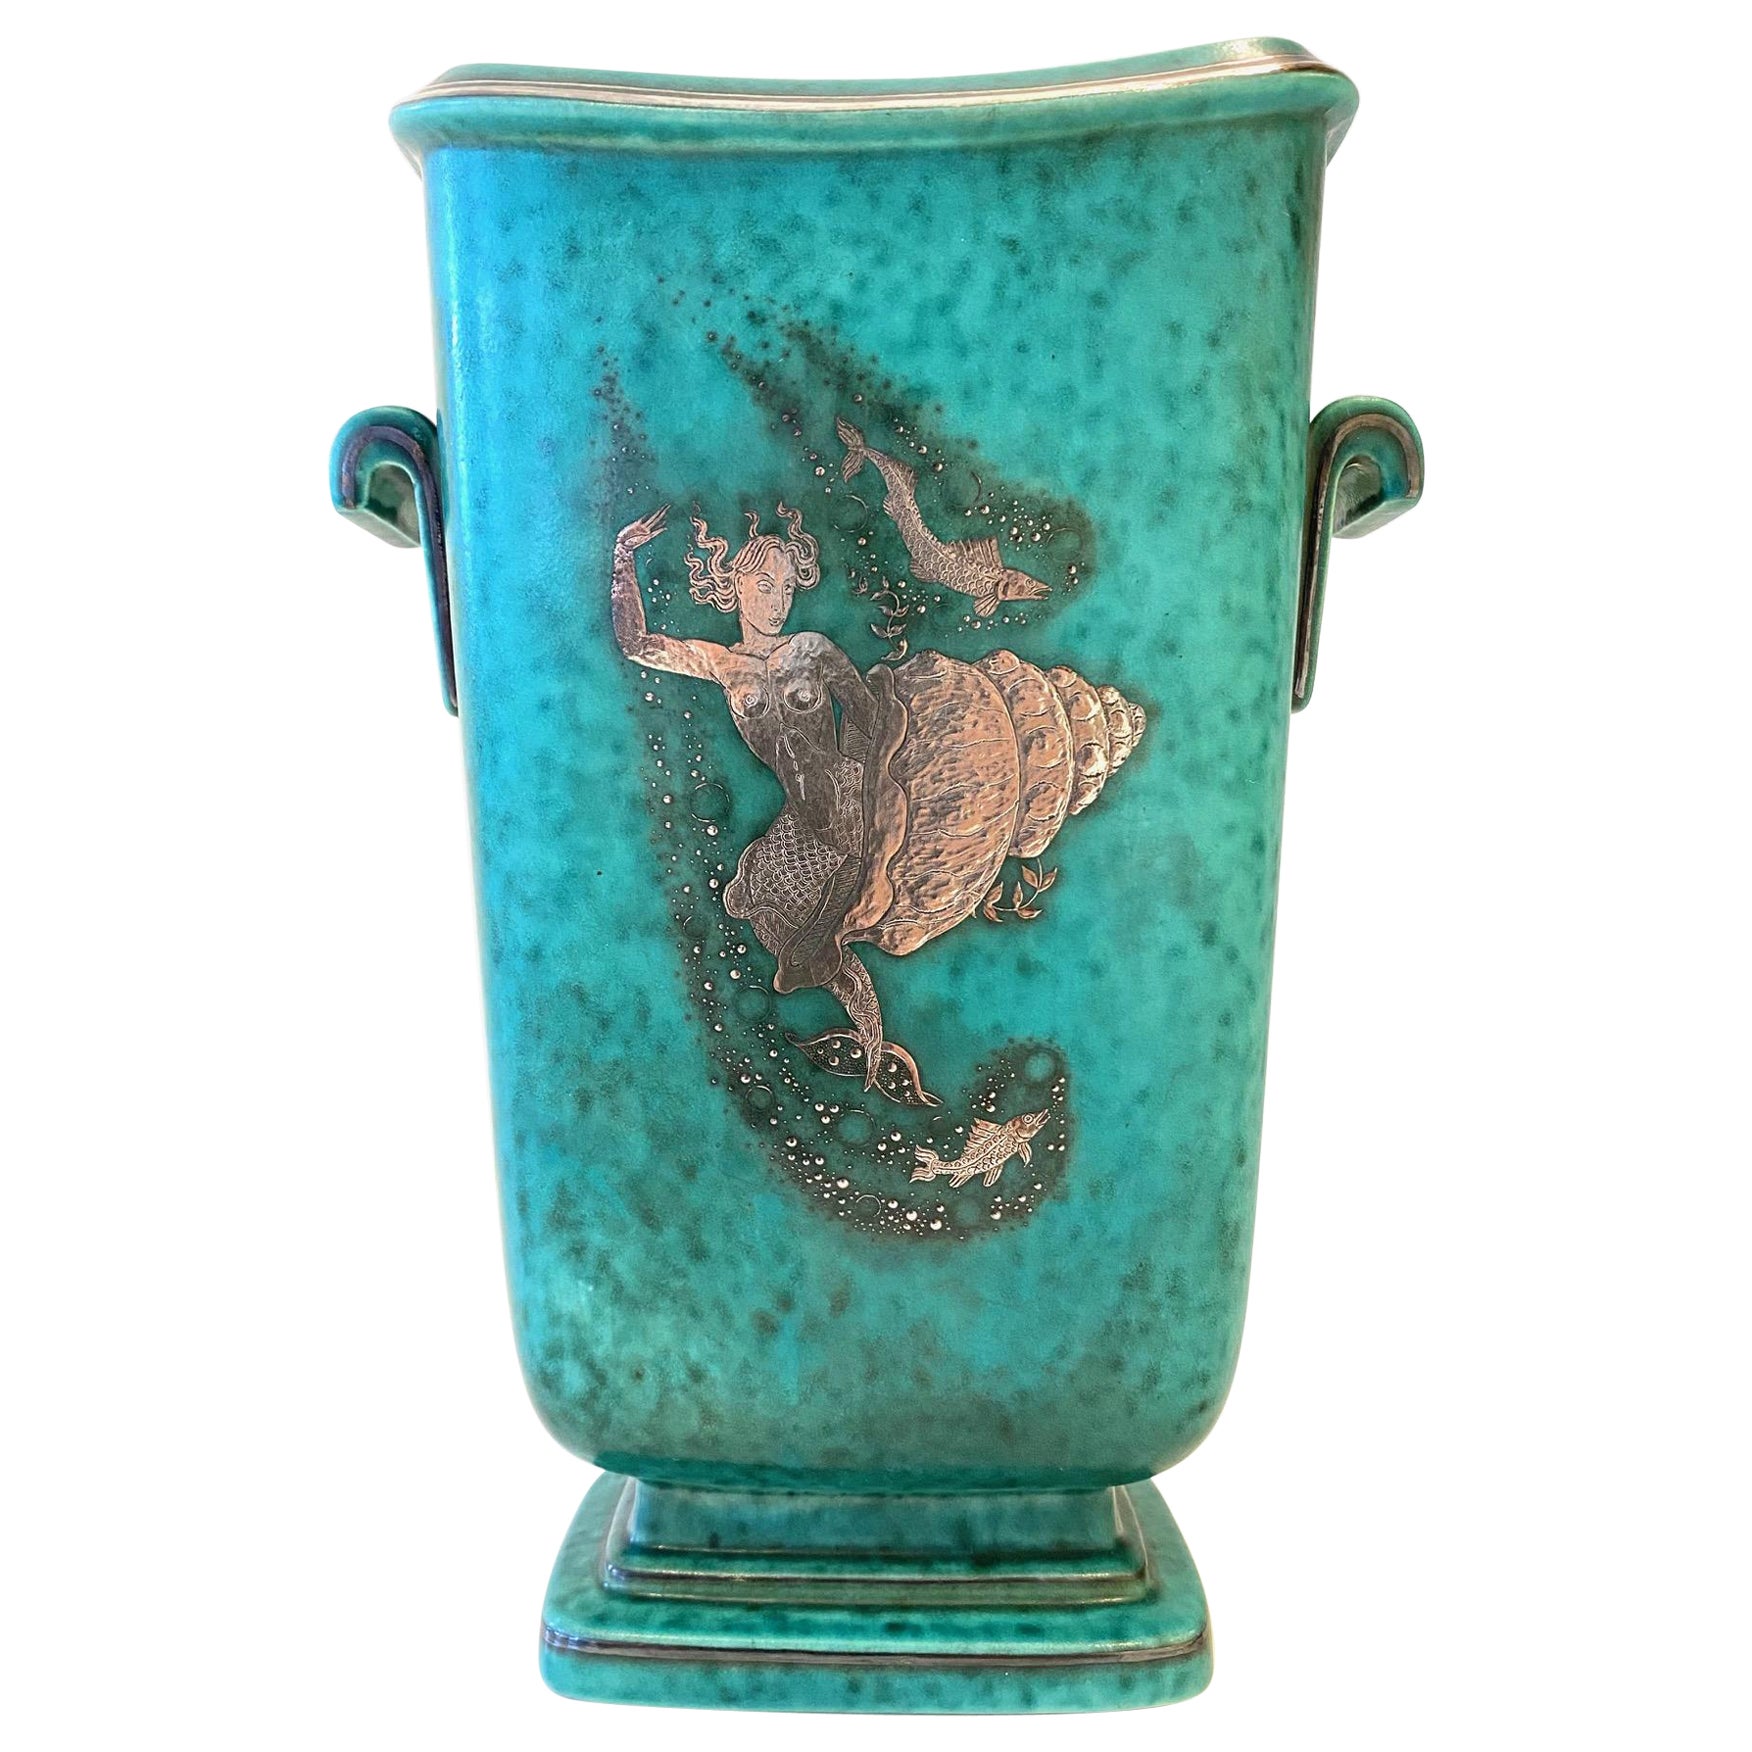  Green Glazed Ceramic and Silver "Argenta" Vase by Wilhelm Kage for Gustavsberg